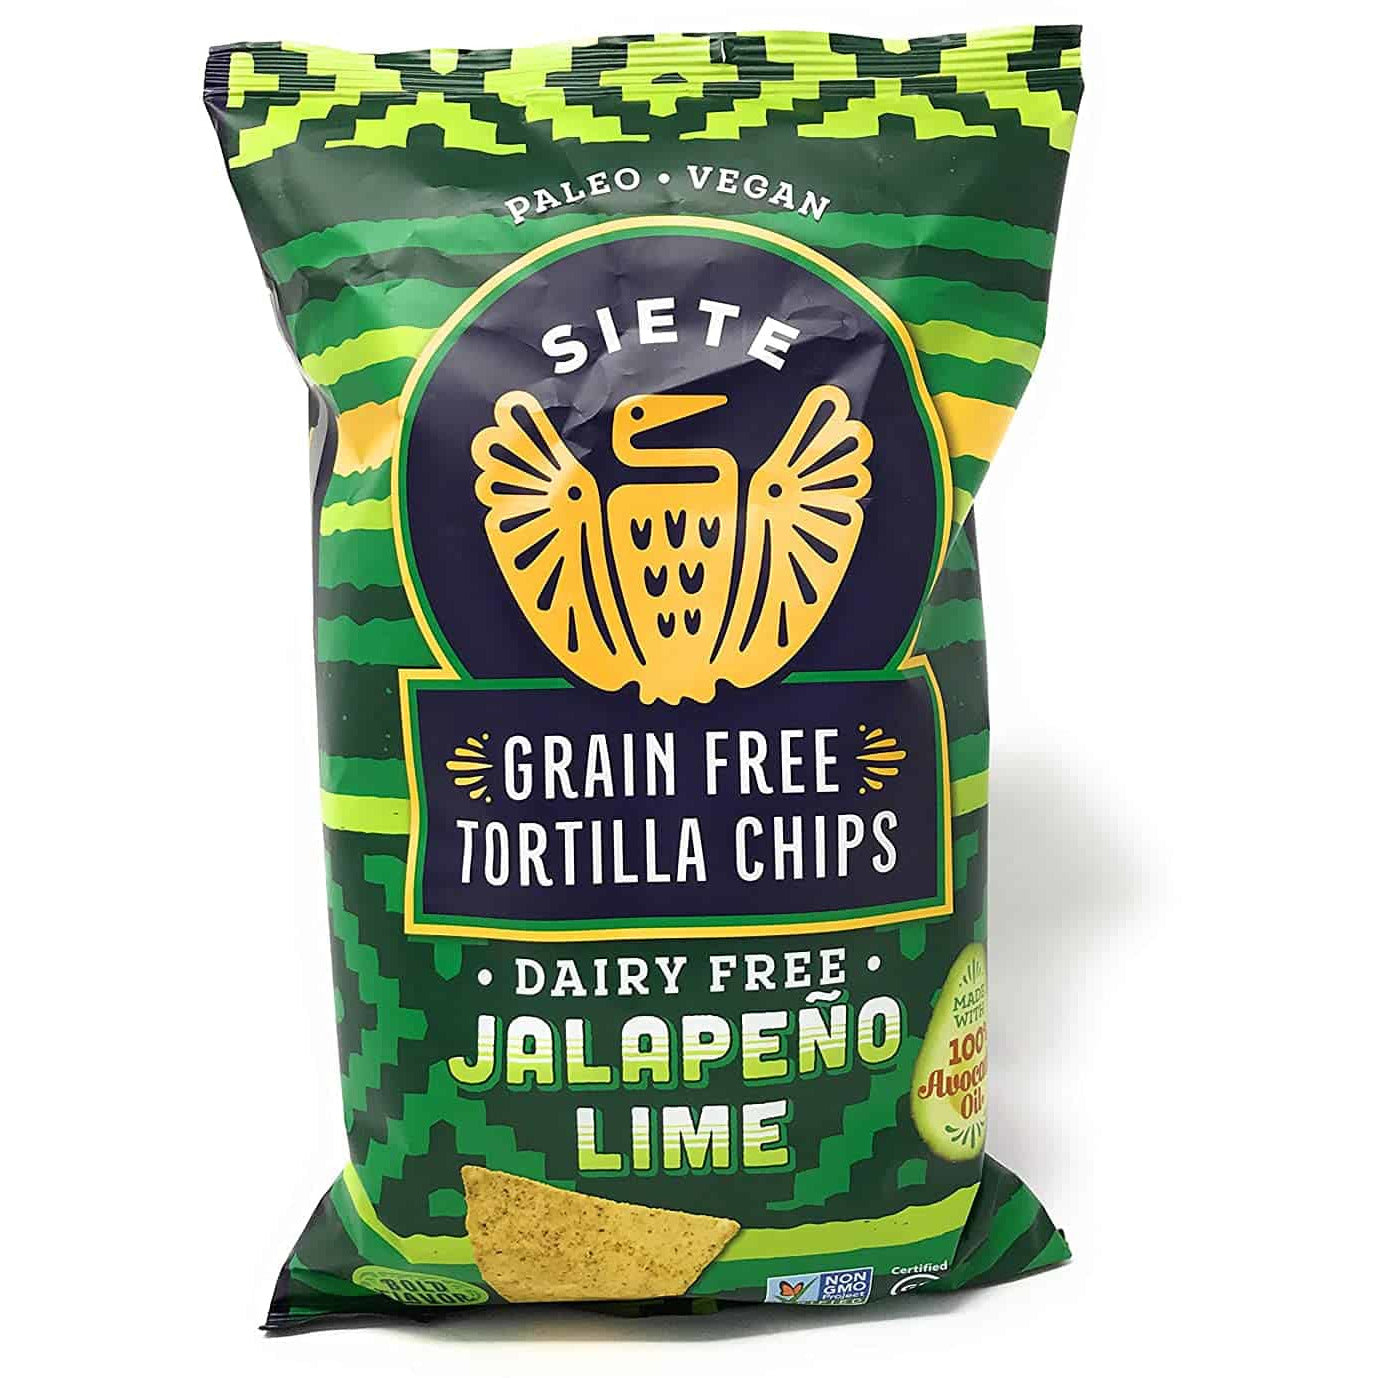 Siete Grain Free Tortilla Chips - Jalapeño Lime, 4 oz Bag (1-Pack)